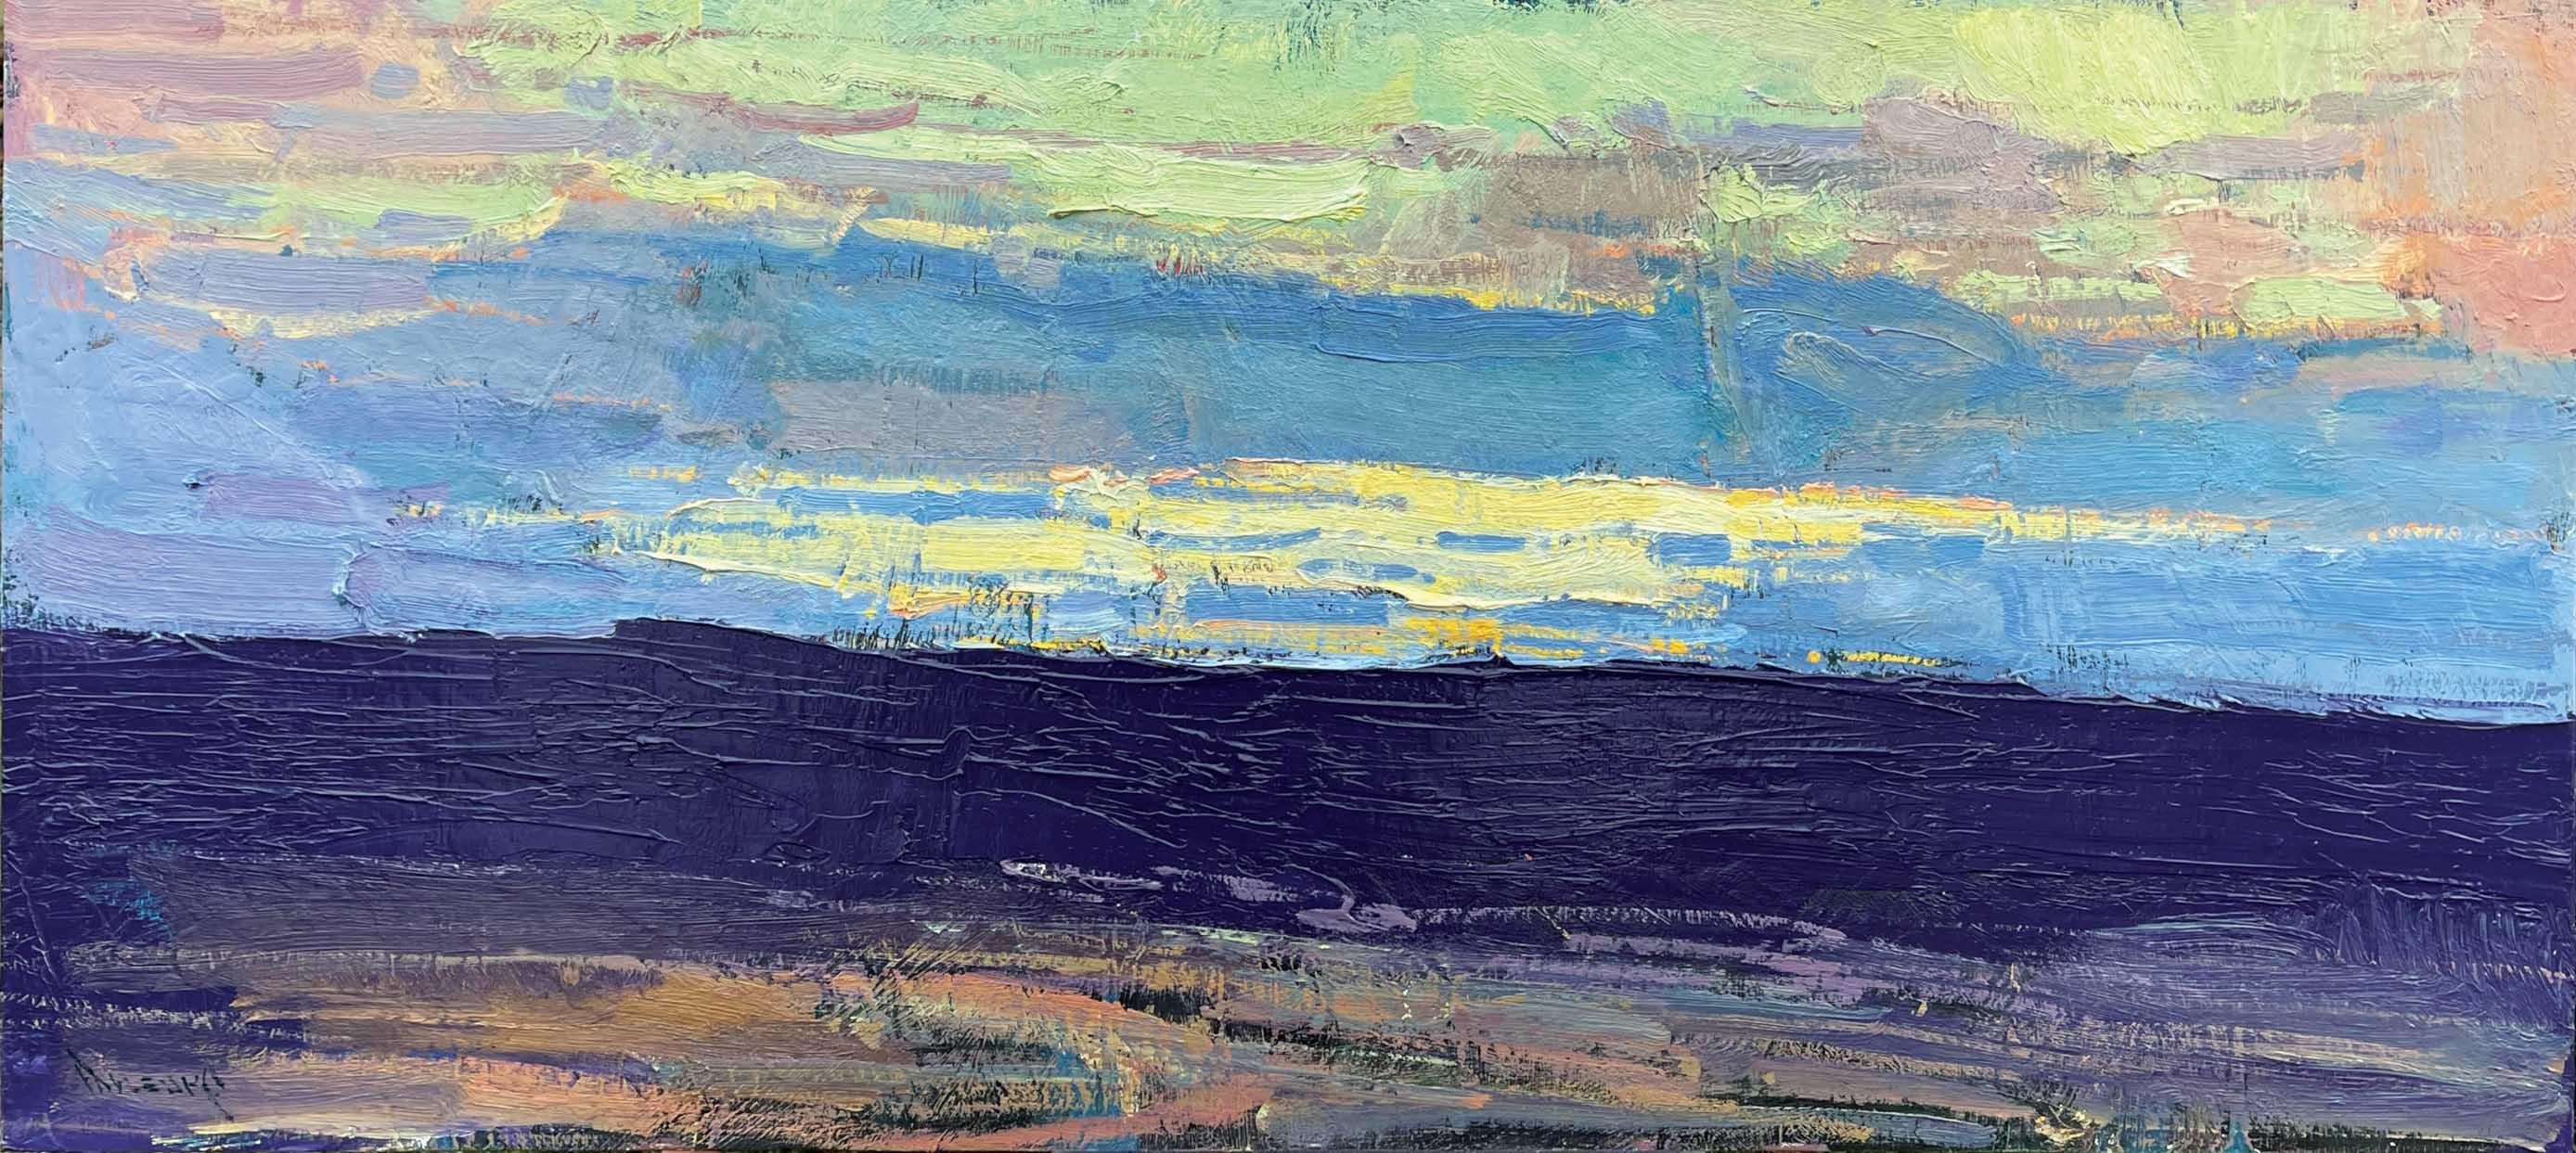 Landscape Painting Anton Pavlenko - Shadow Hills